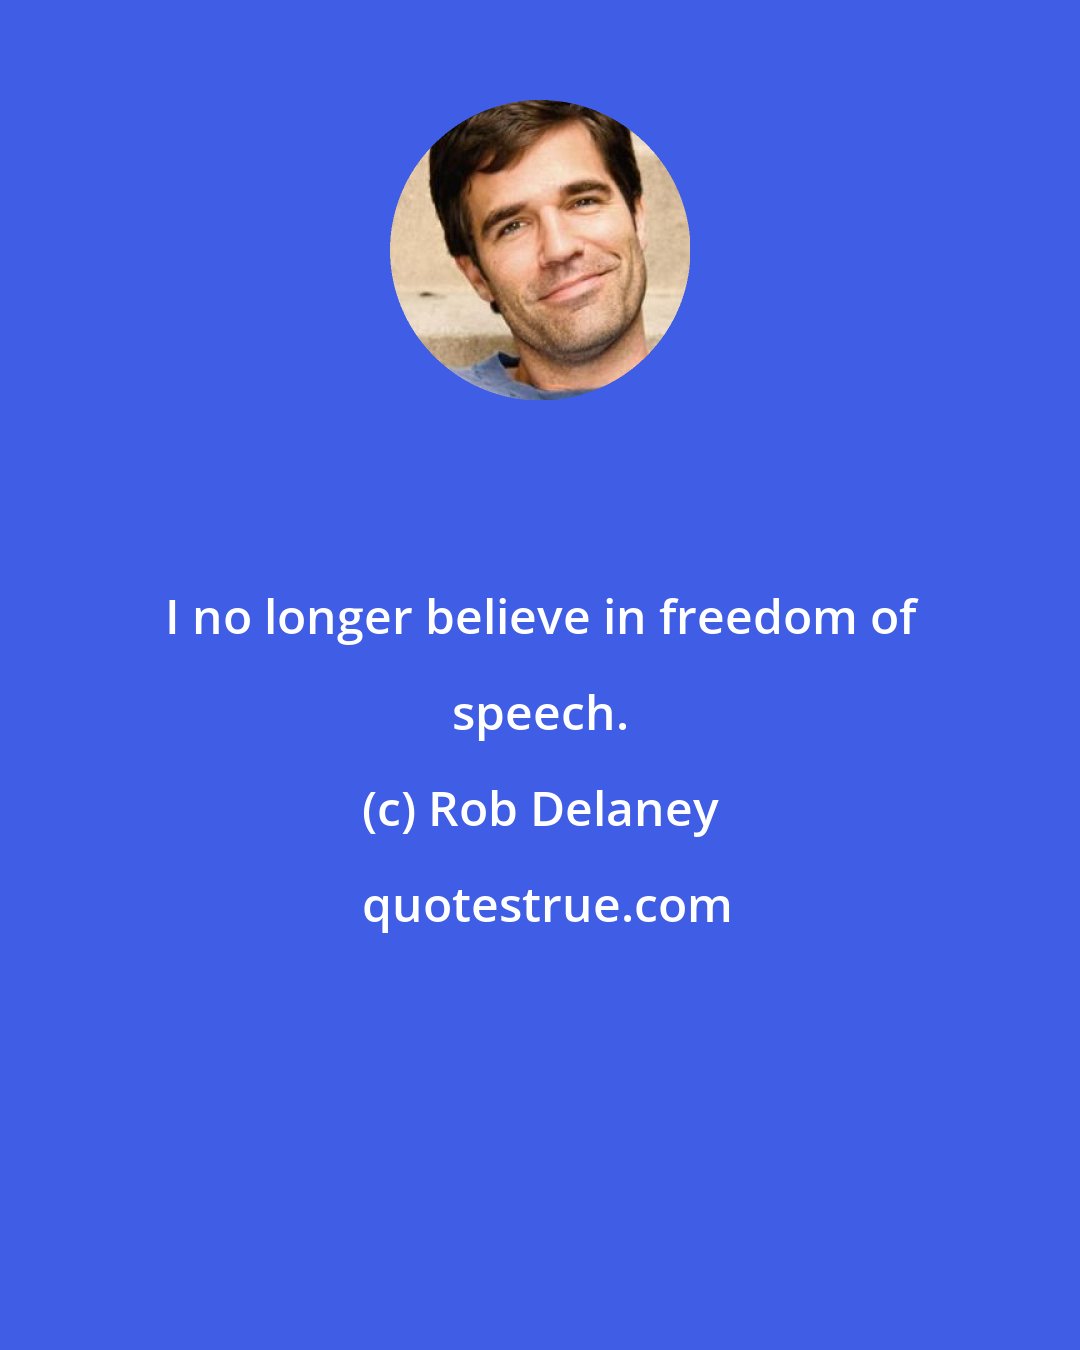 Rob Delaney: I no longer believe in freedom of speech.